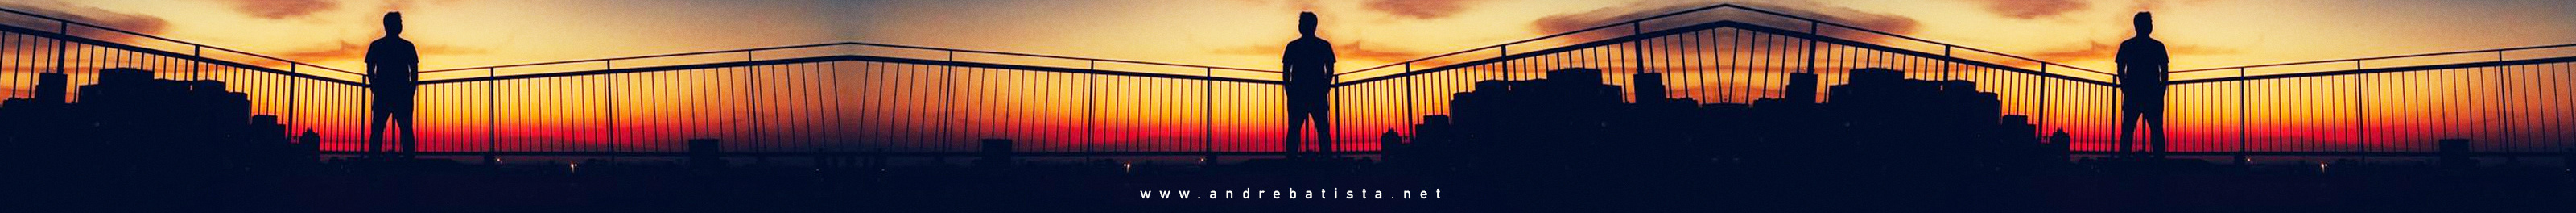 André Batista's profile banner